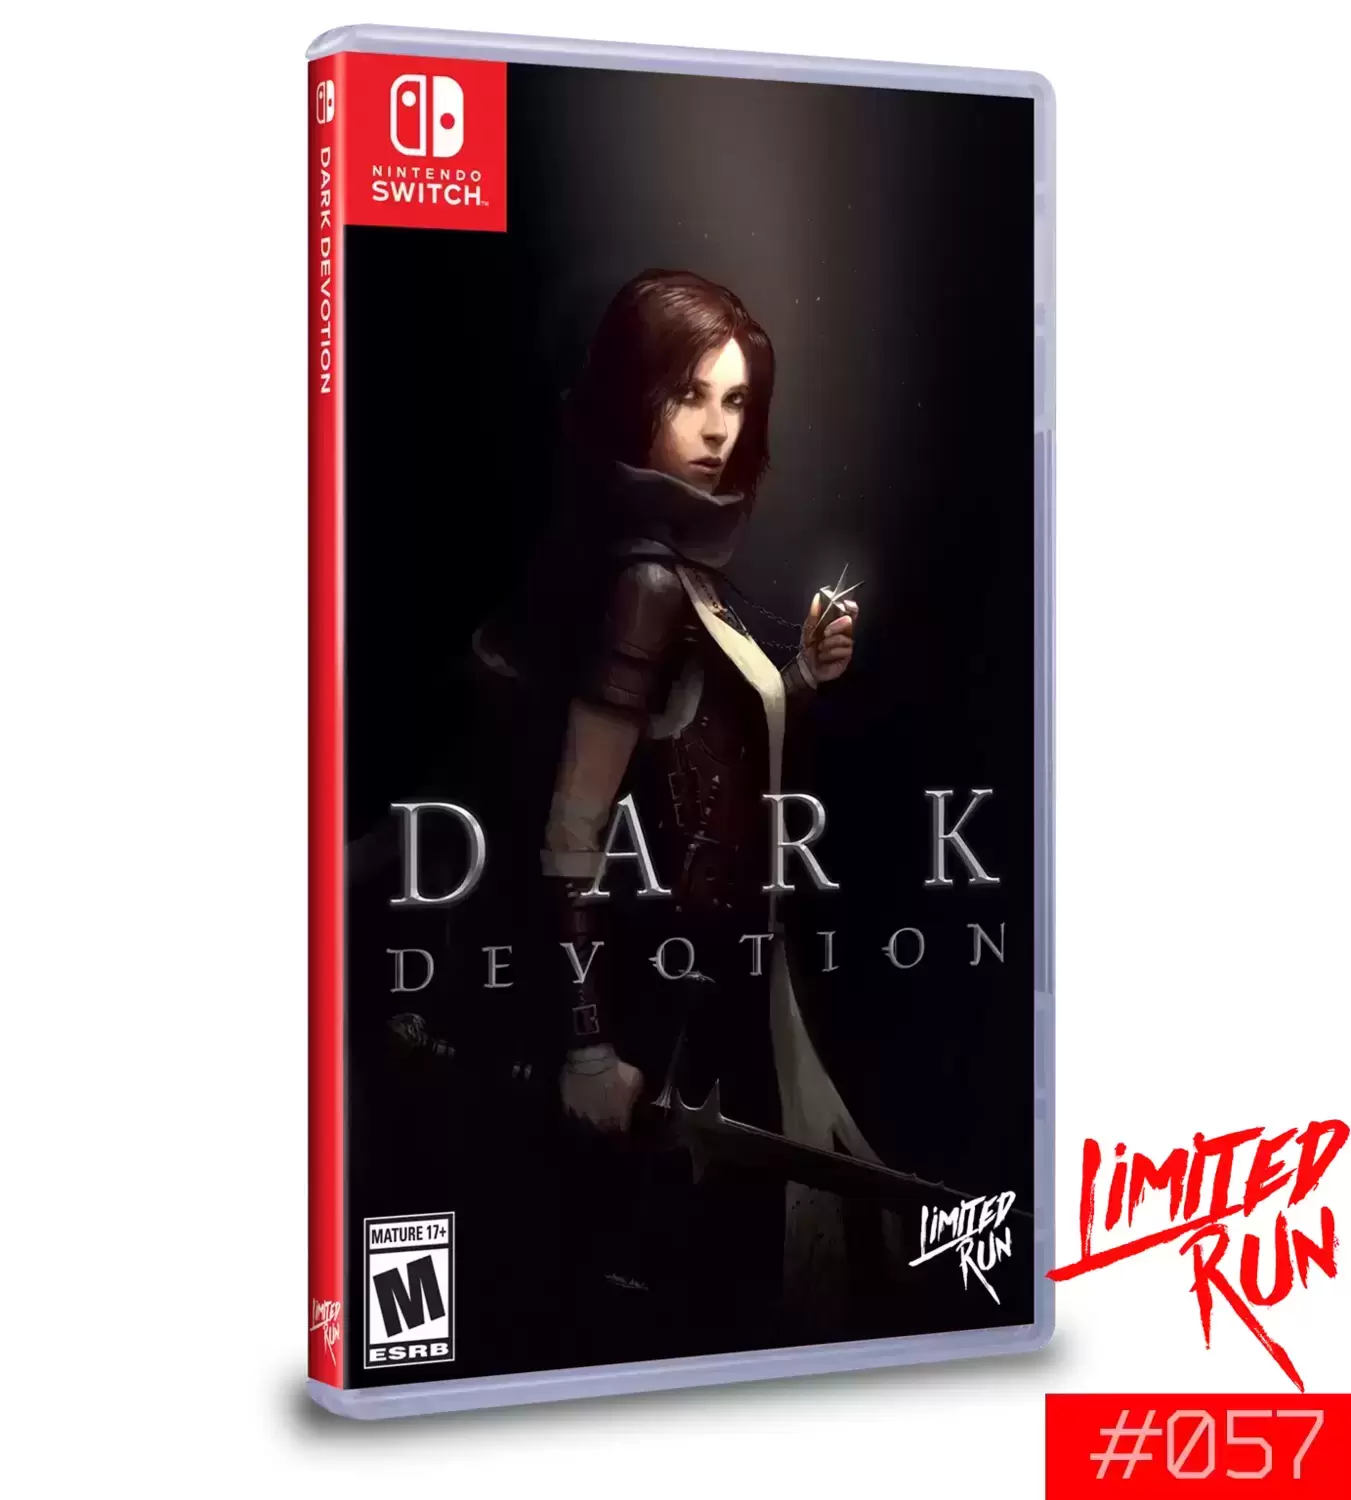 Jeux Nintendo Switch - Dark Devotion - Limited Run Games #057